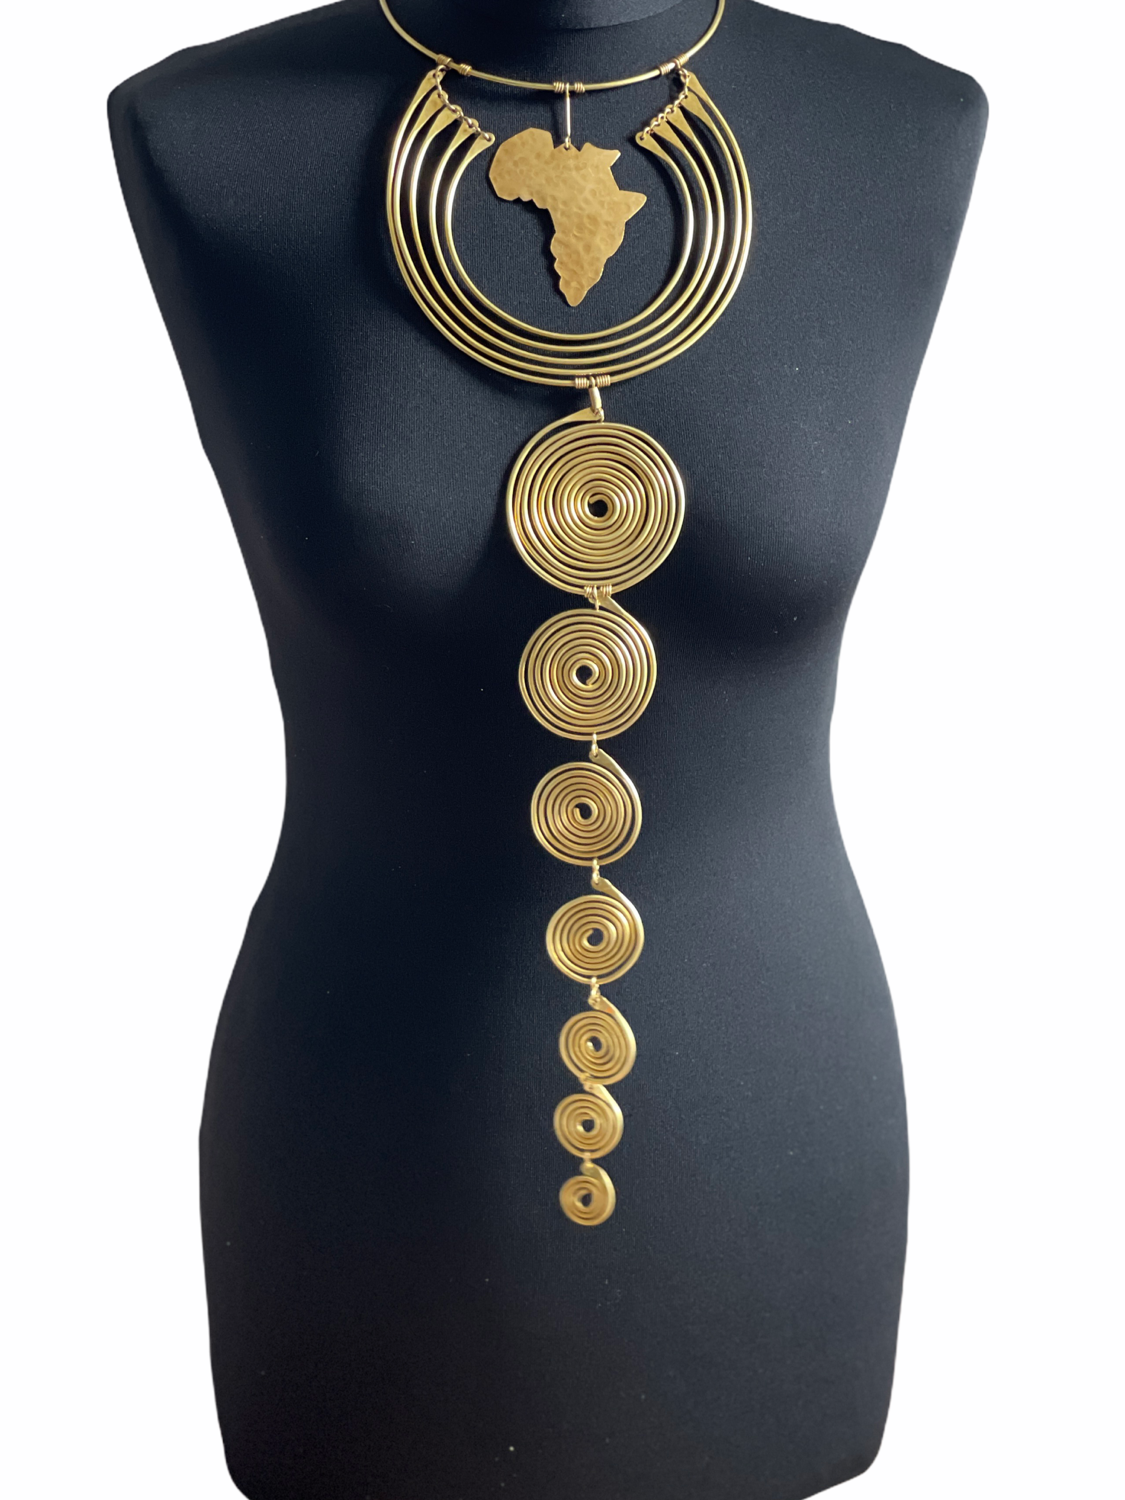 Authentic Unique African Craftsmanship Brass Metal Statement Pendant Necklace